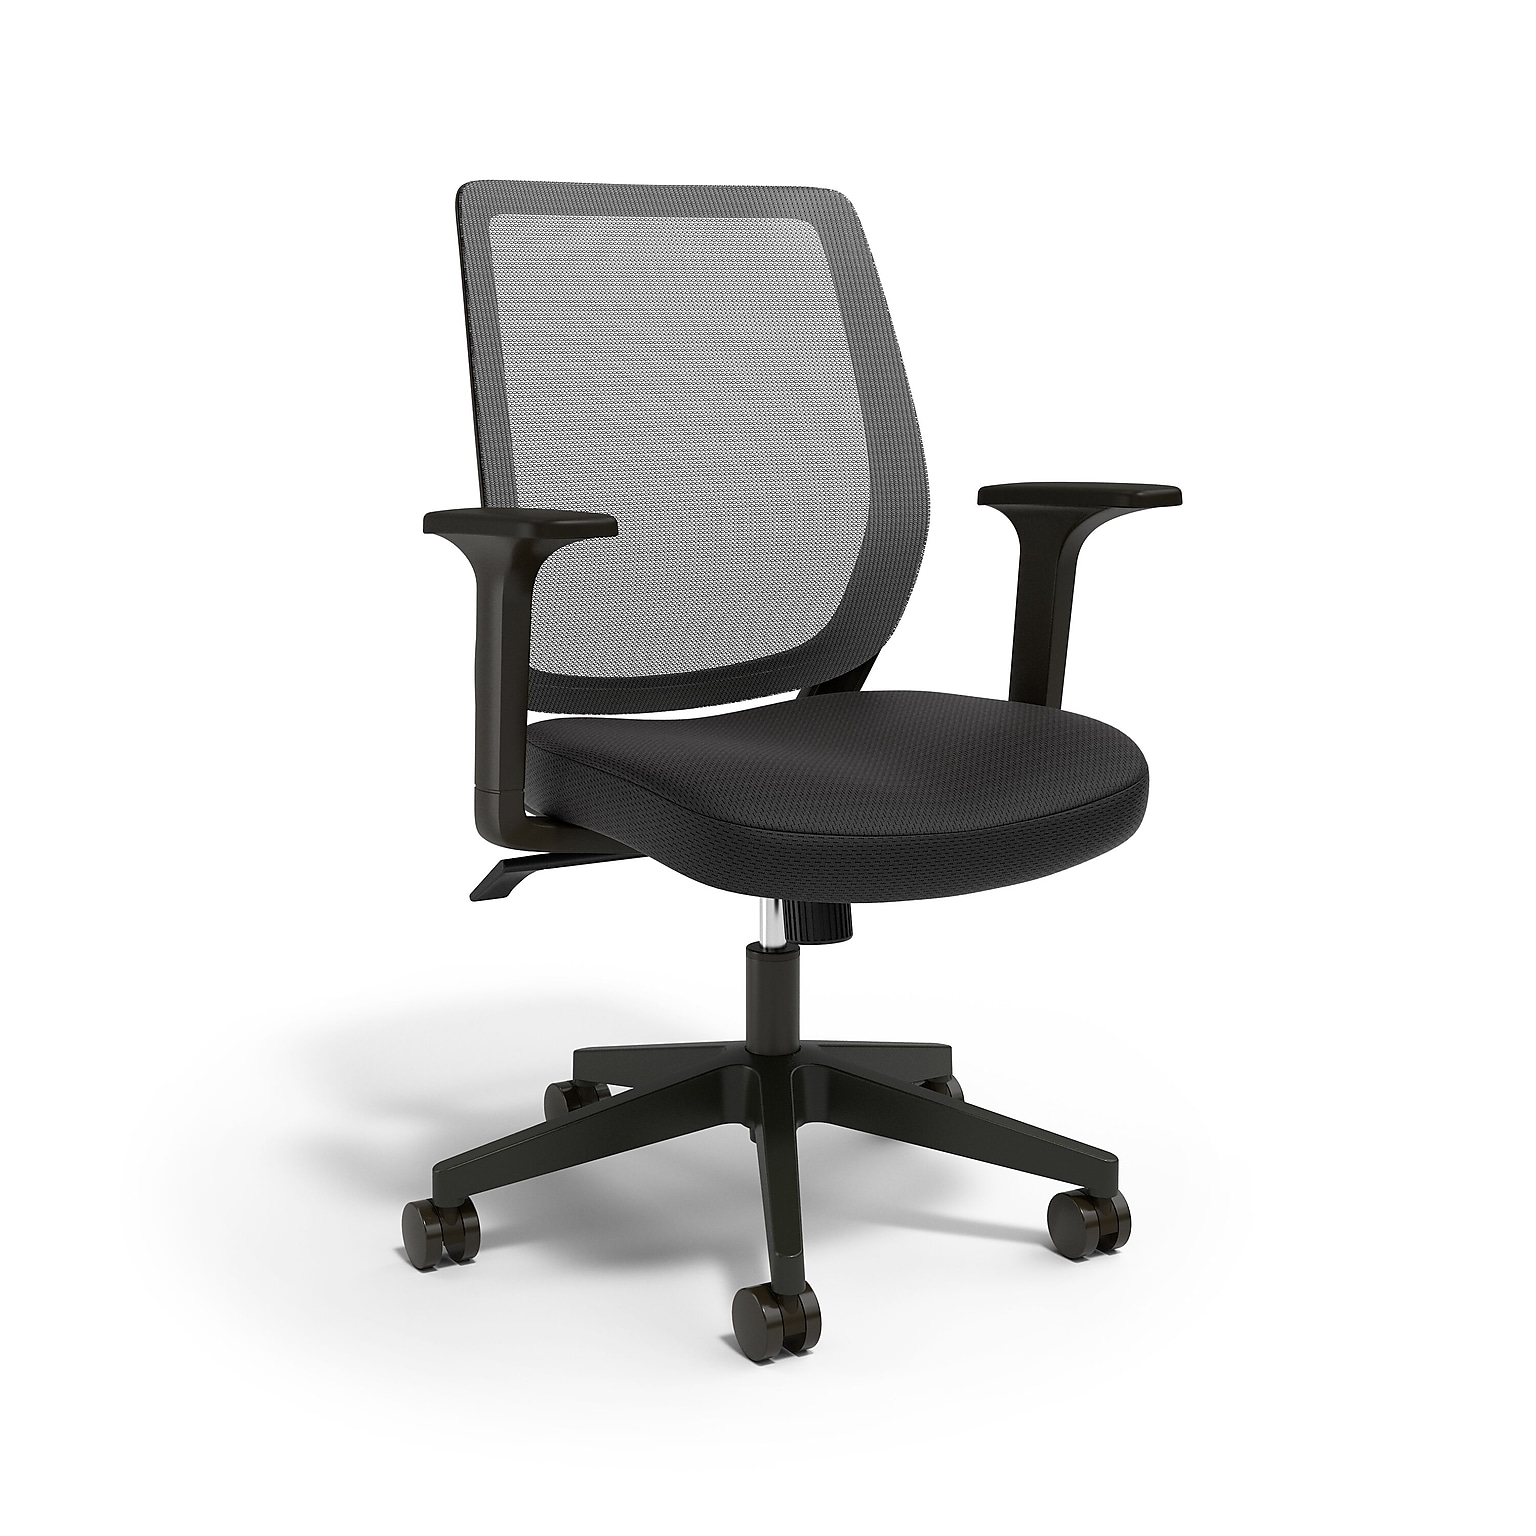 Union & Scale Essentials Ergonomic Fabric Swivel Task Chair (Black) $60 + Free Store Pickup at Staples